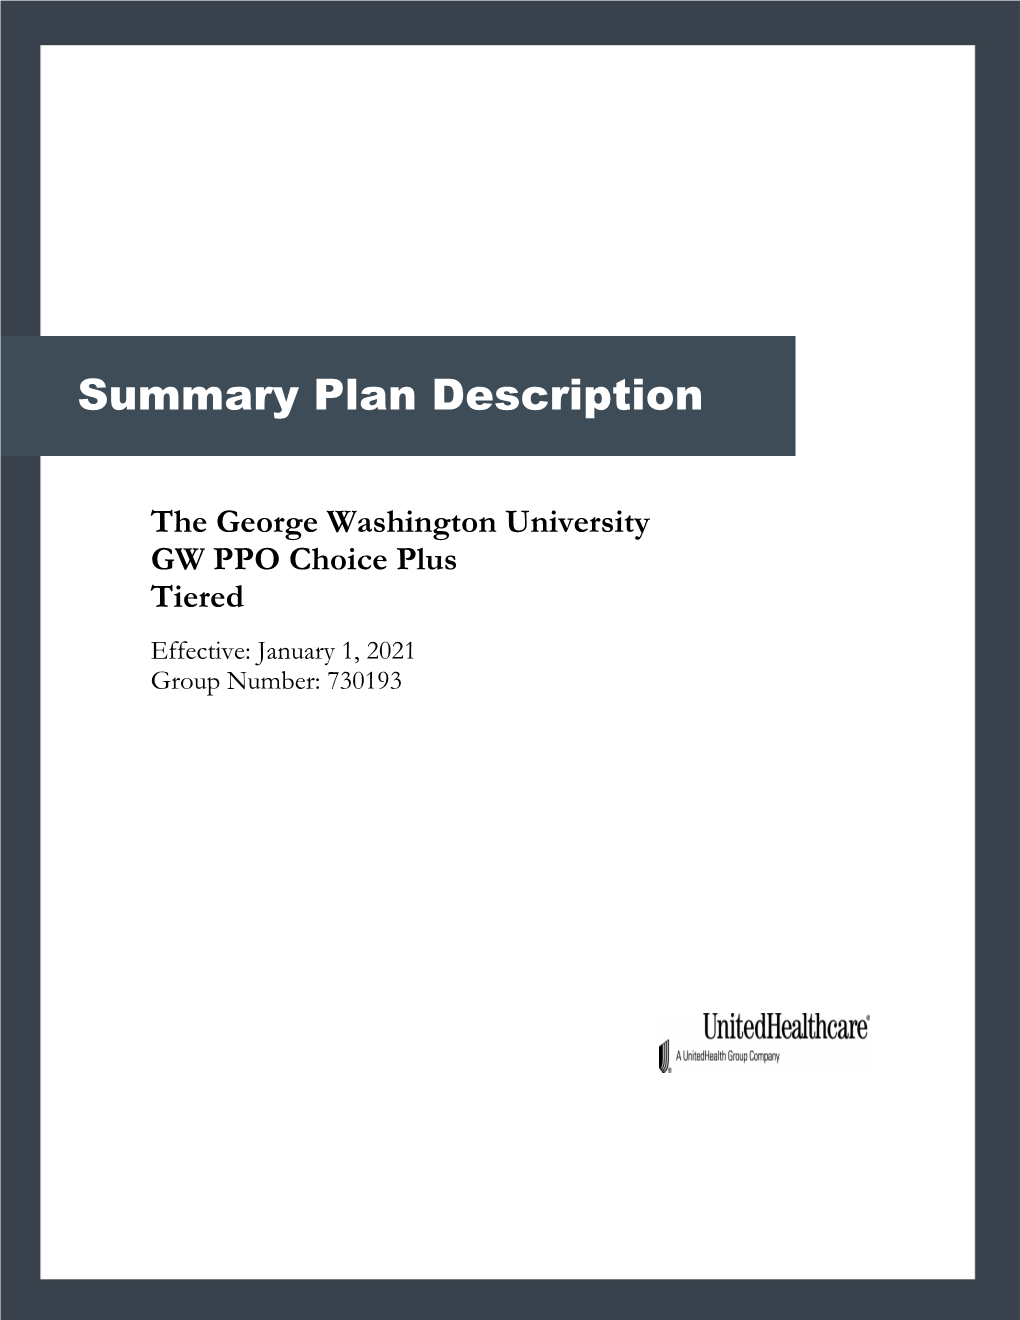 GW PPO Summary Plan Description